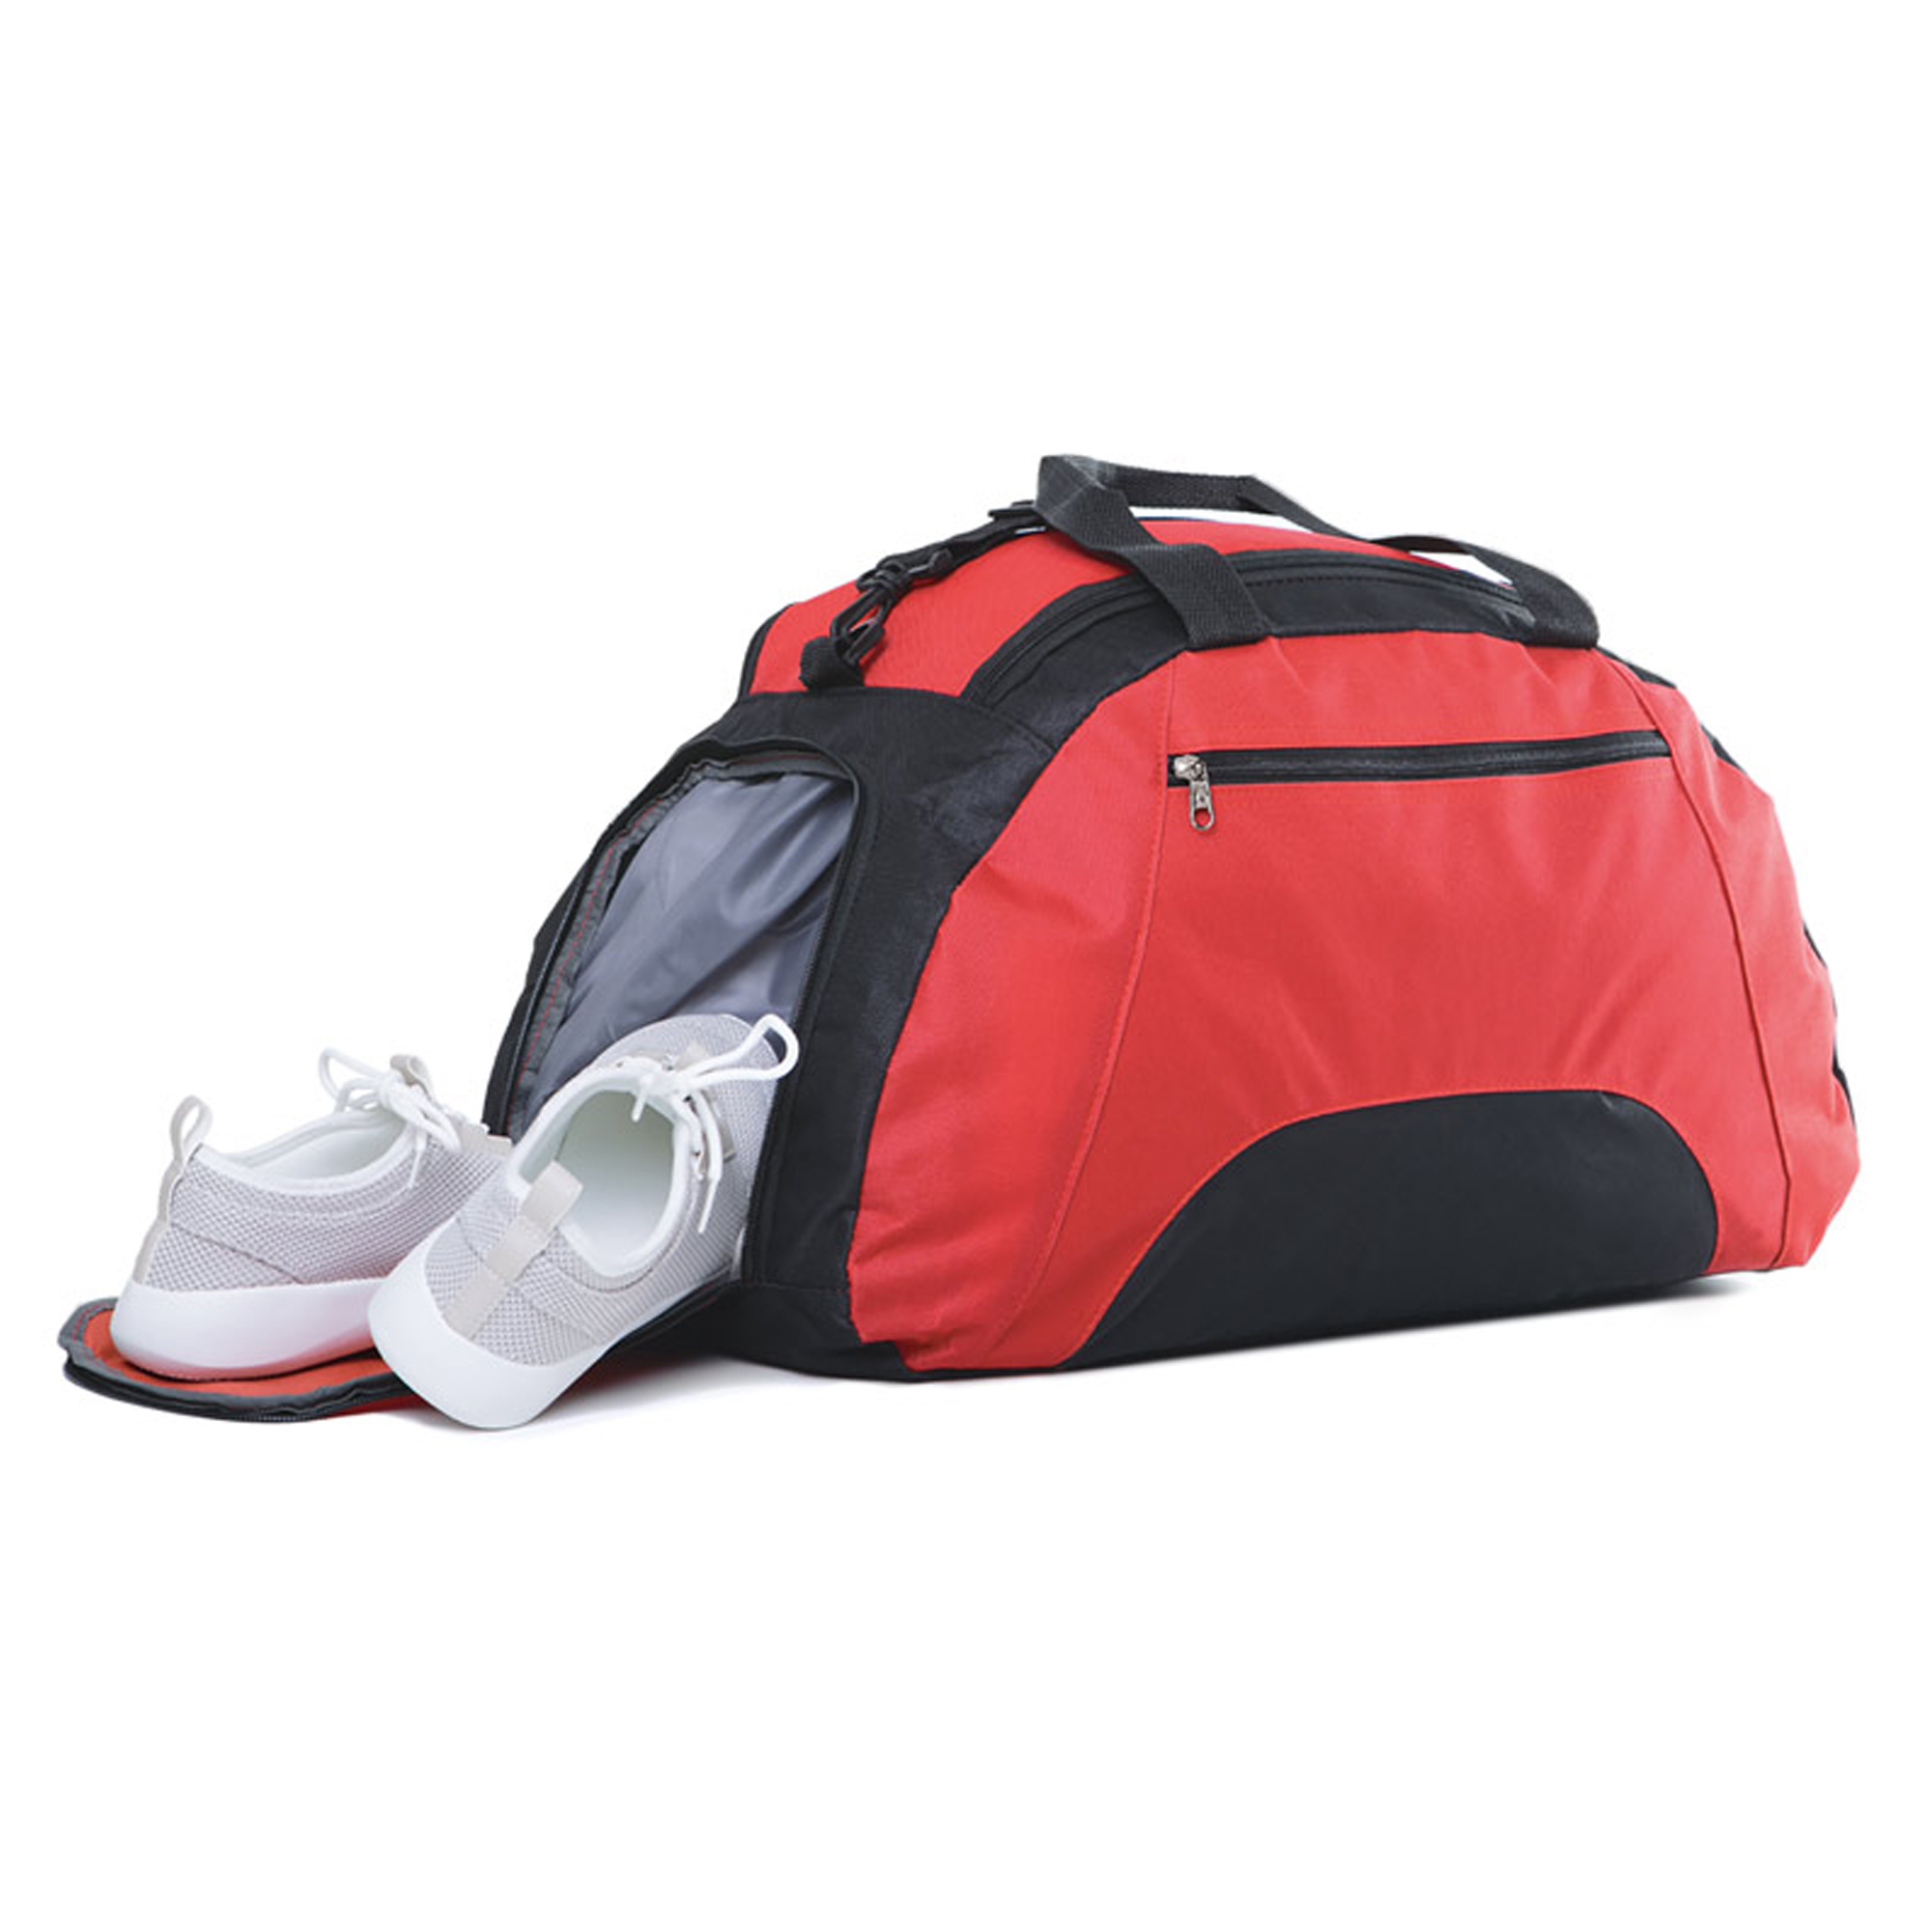 Športová taška FIT červená s oddelenou priehradkou na obuv